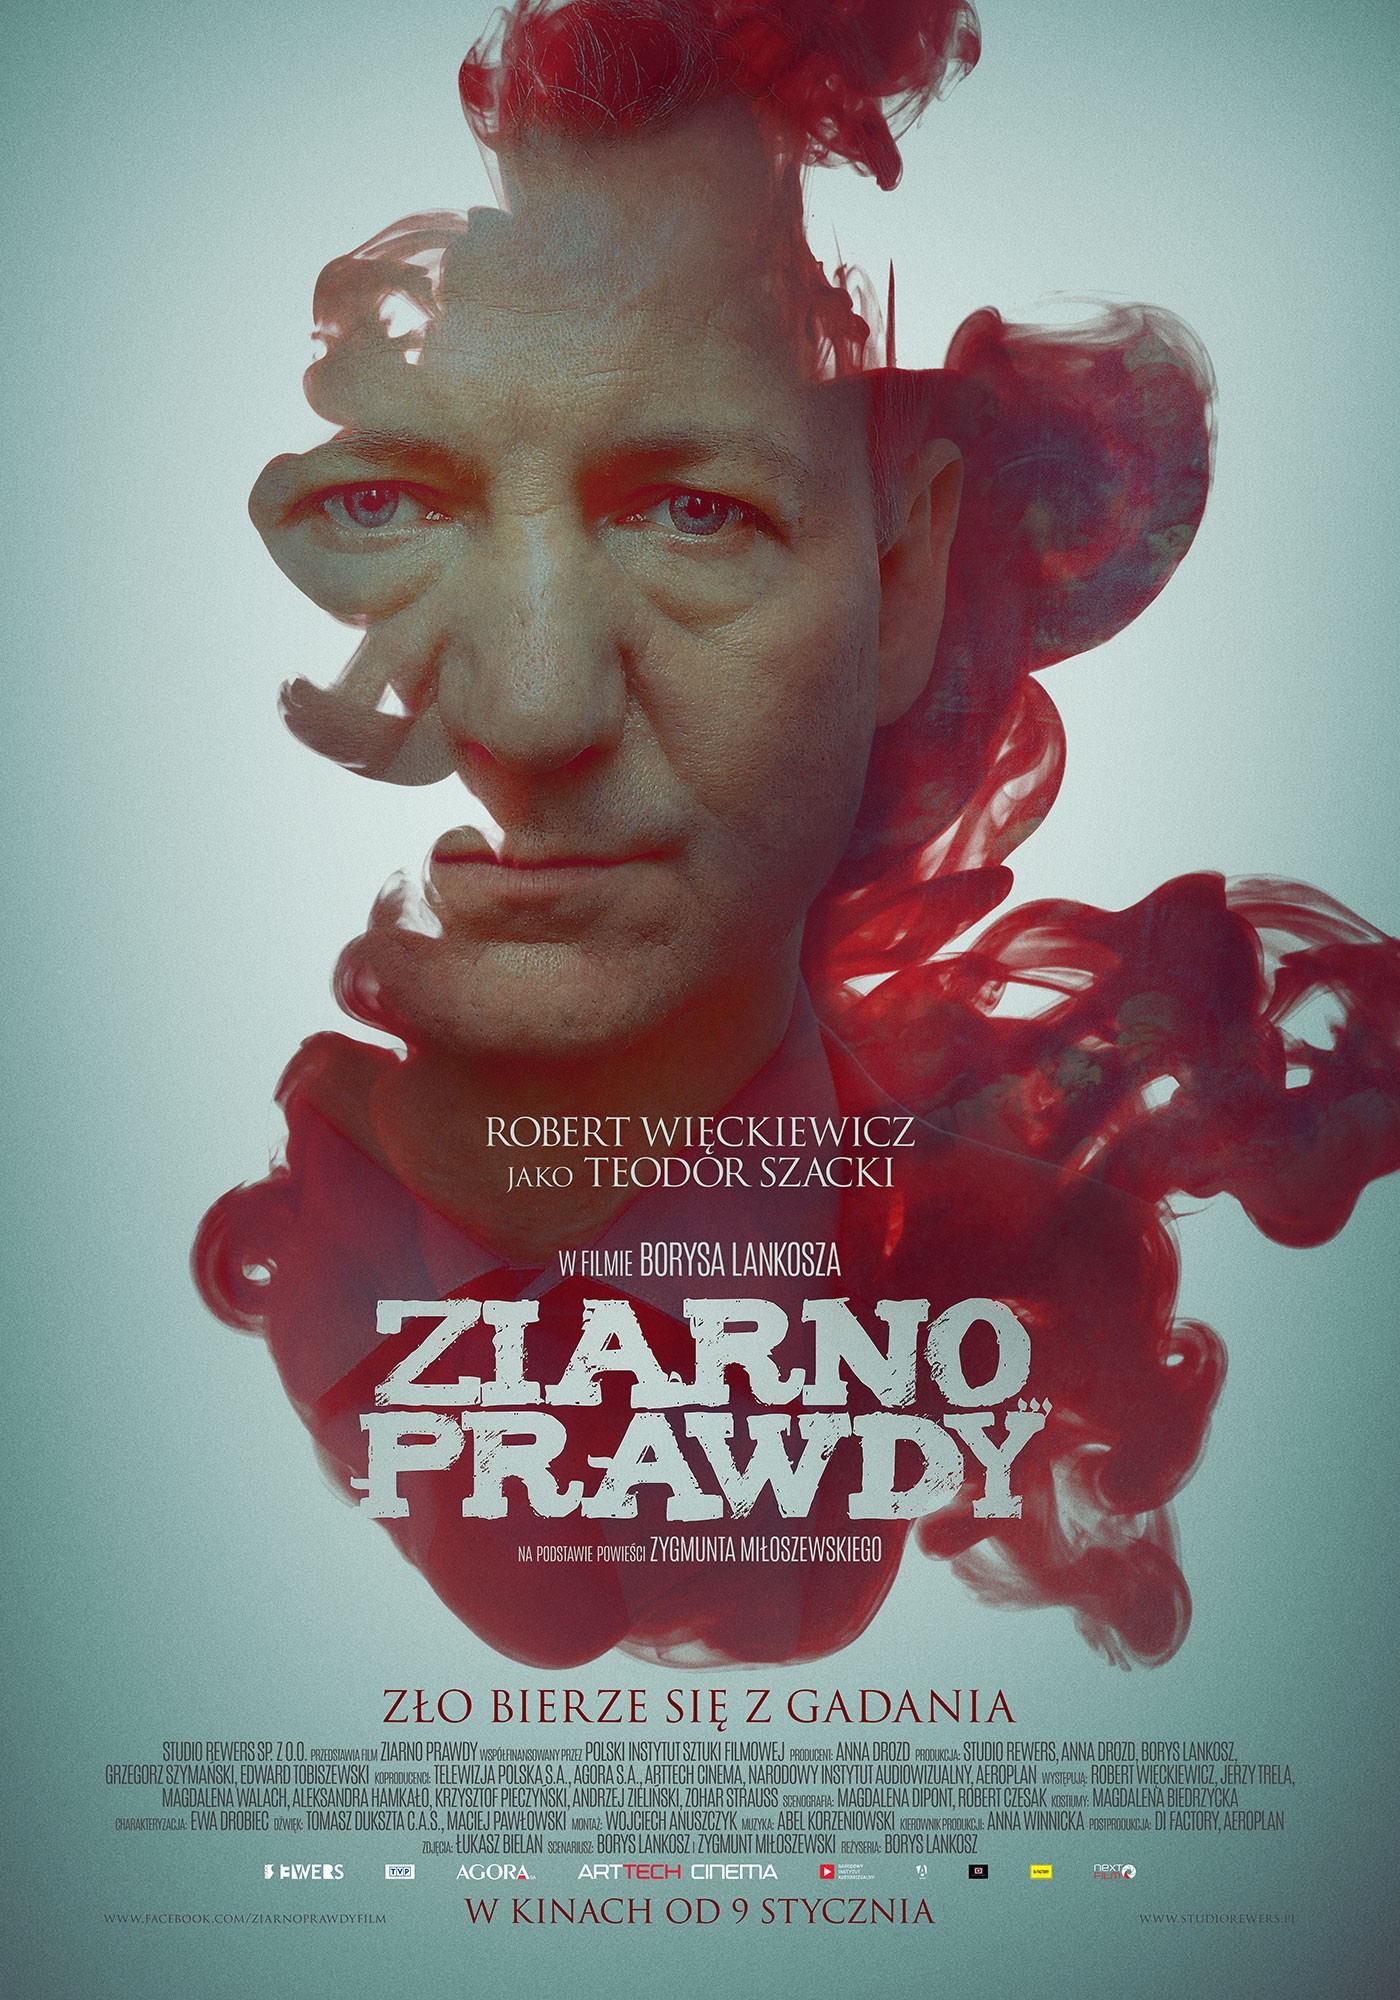 Mega Sized Movie Poster Image for Ziarno prawdy (#2 of 2)